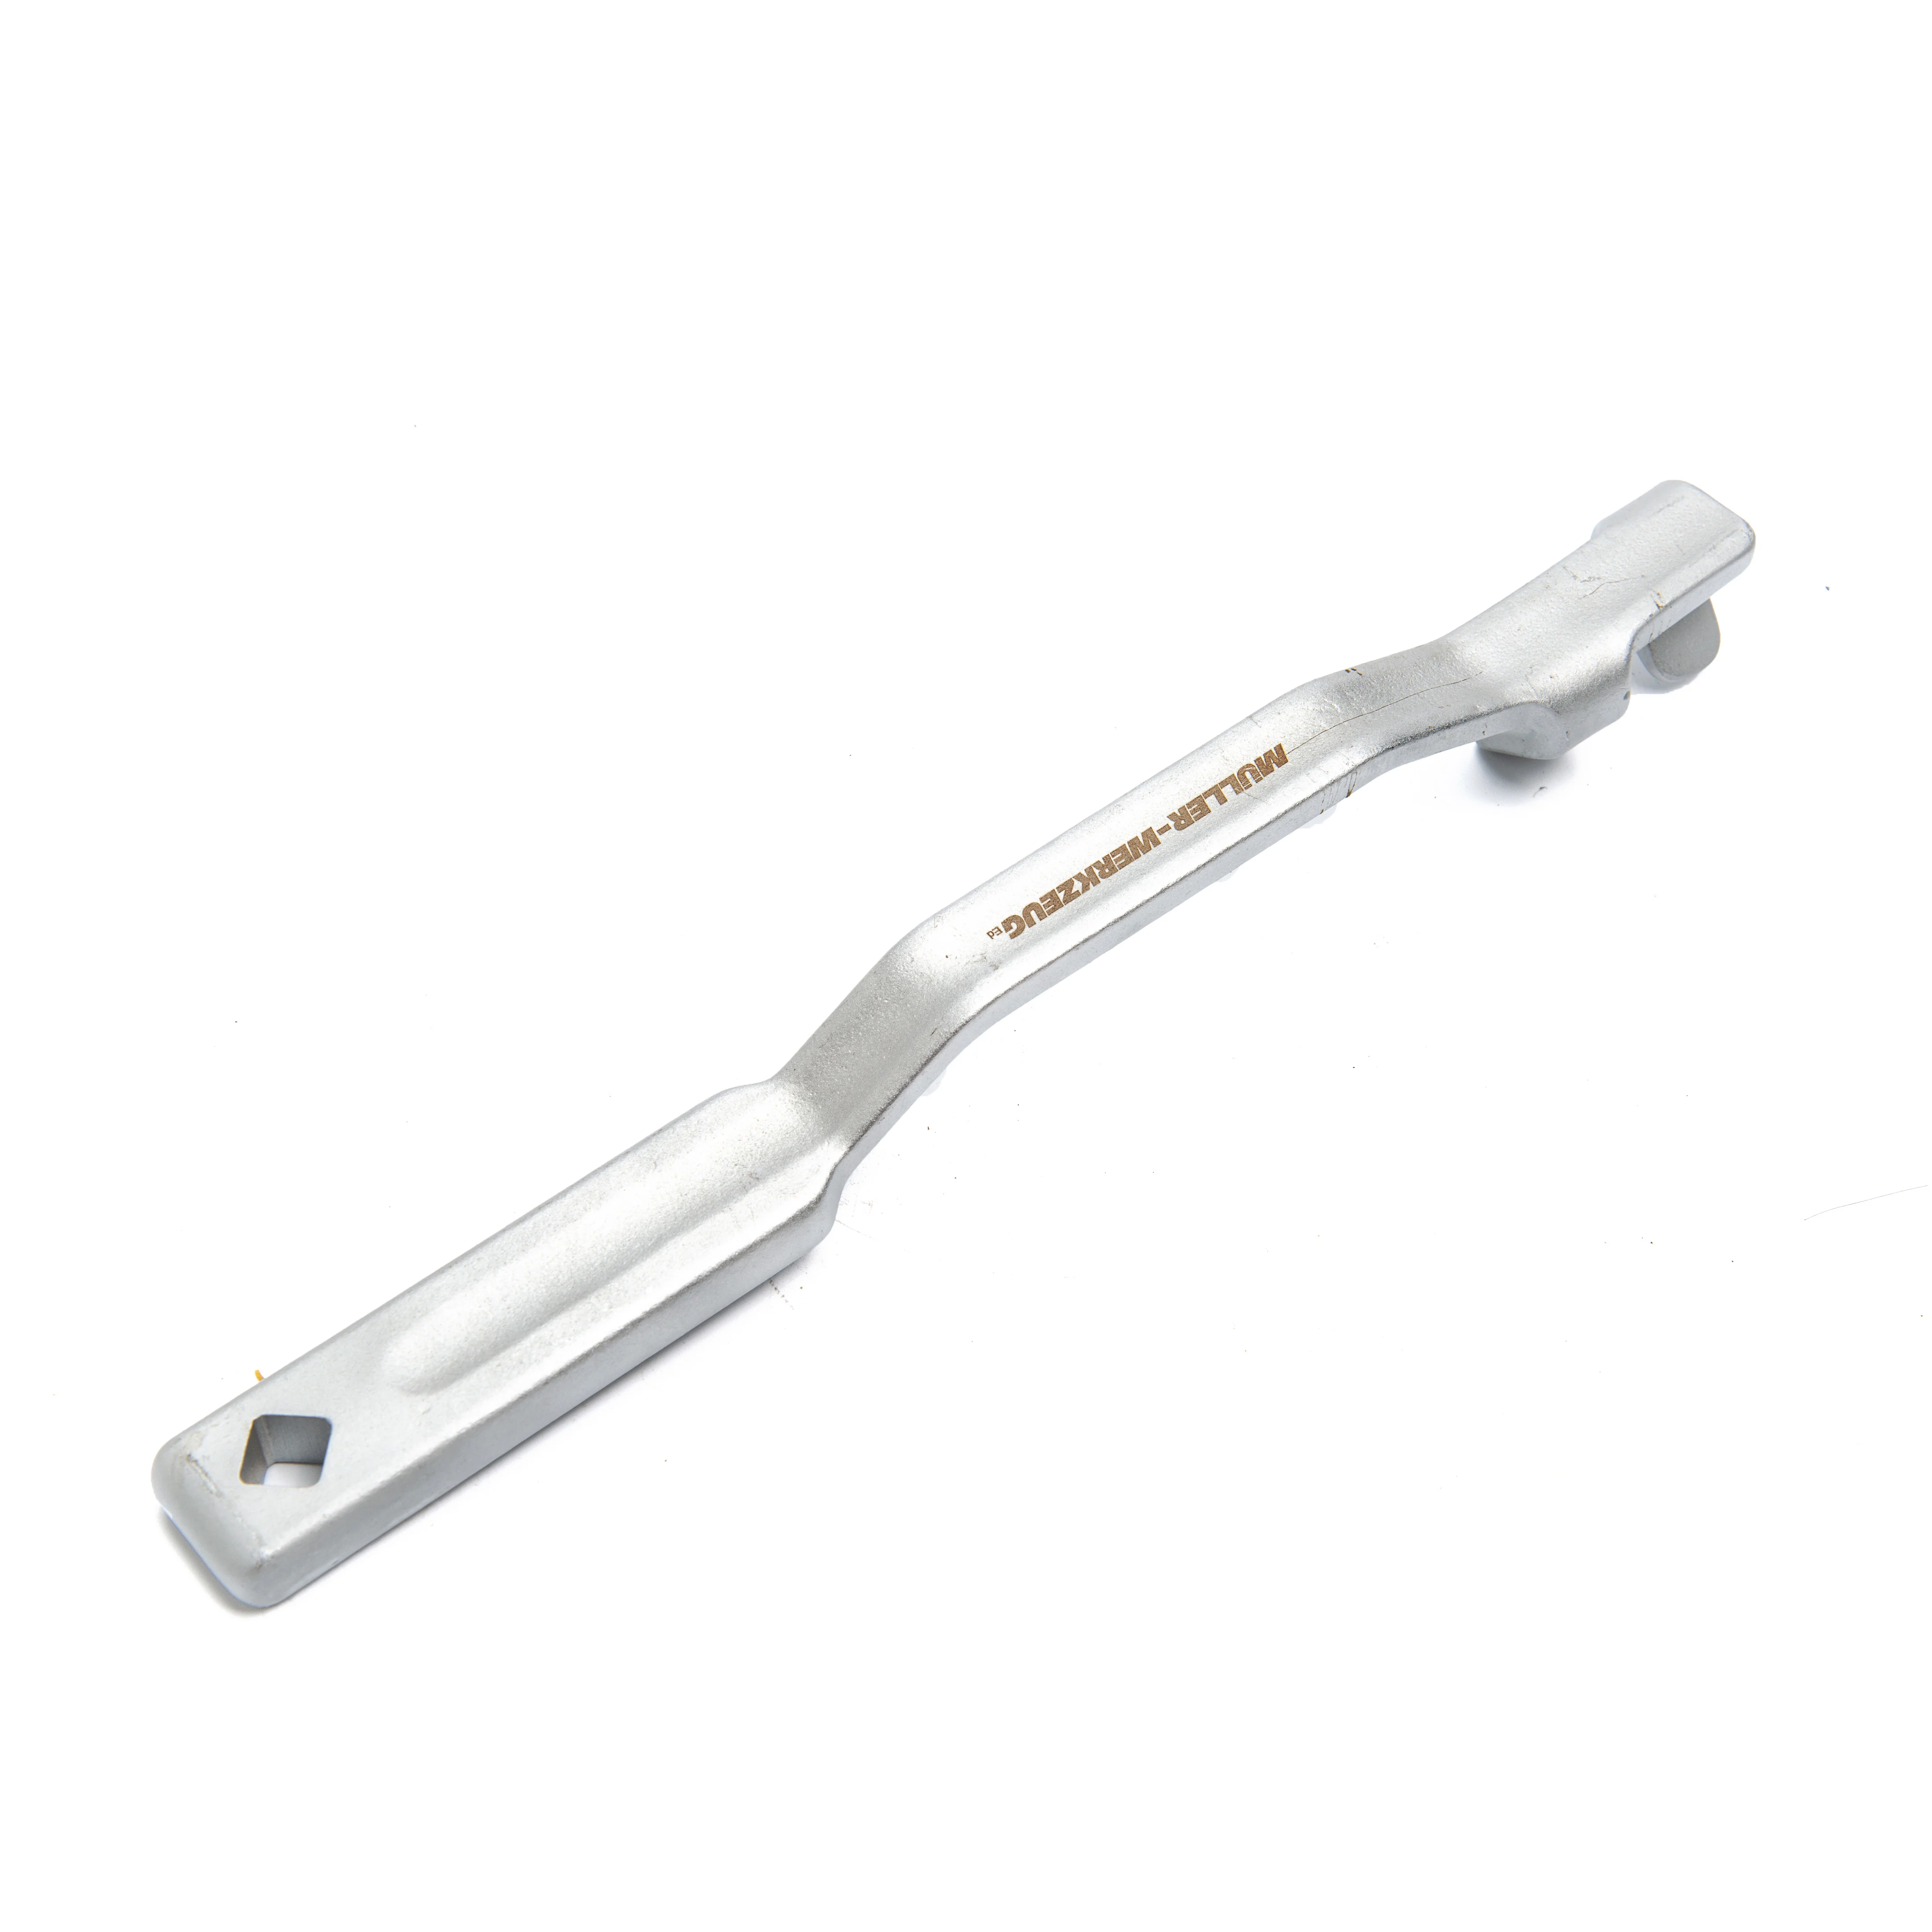 Universal wrench extender adaptor